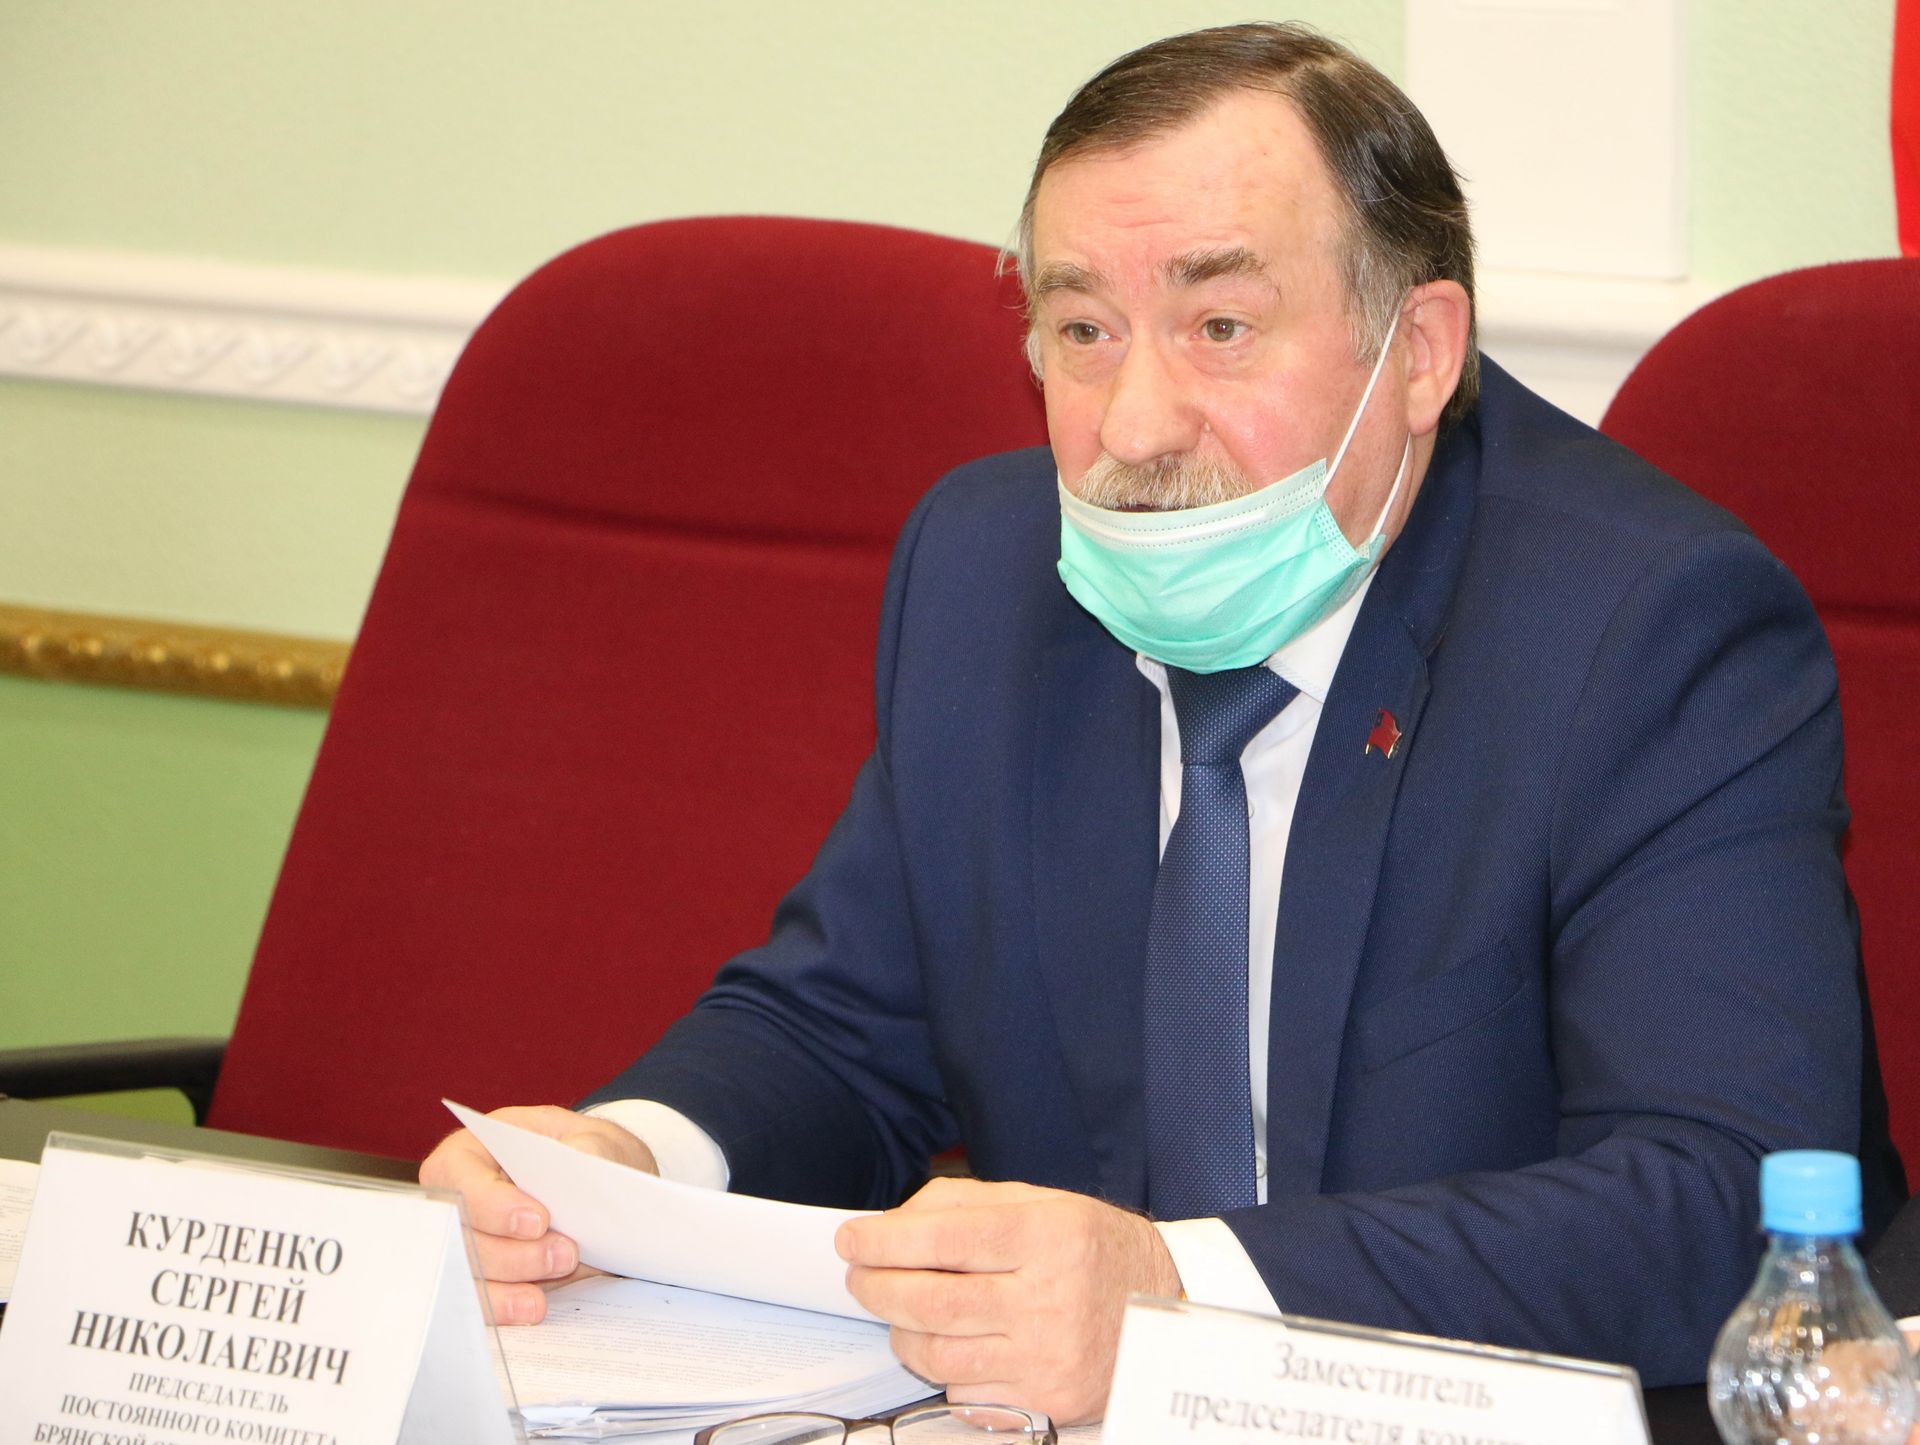 Сергей Курденко отказался от должности председателя комитета в Брянской облдуме